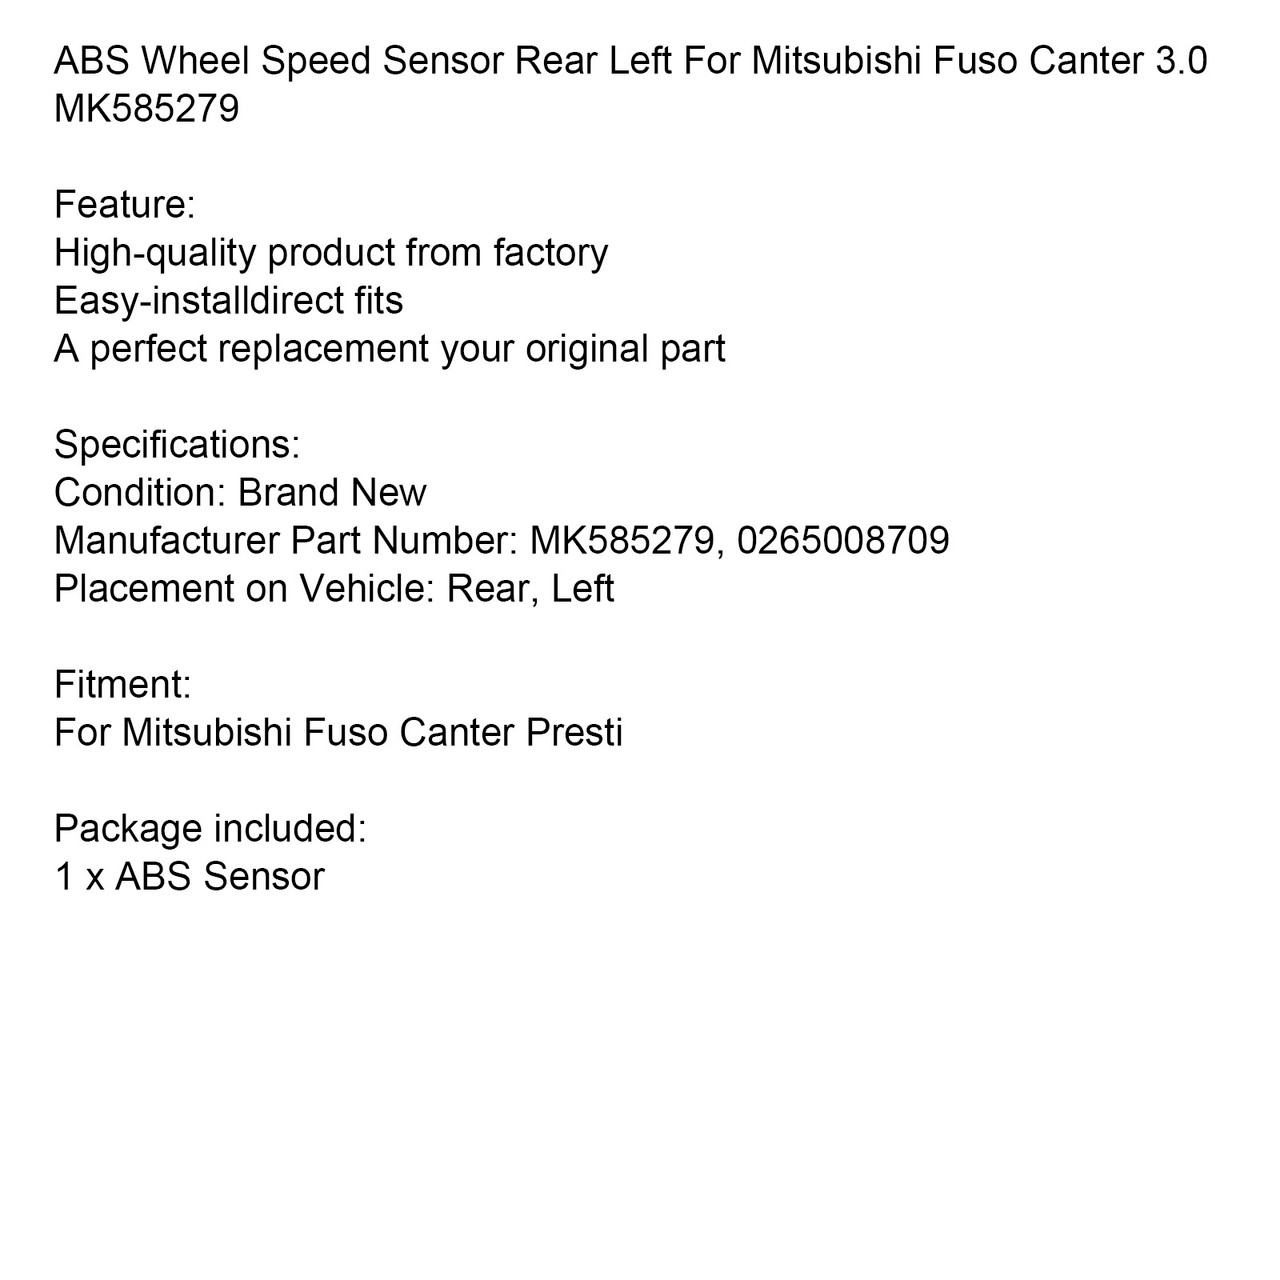 ABS Wheel Speed Sensor Rear Left For Mitsubishi Fuso Canter 3.0 MK585279